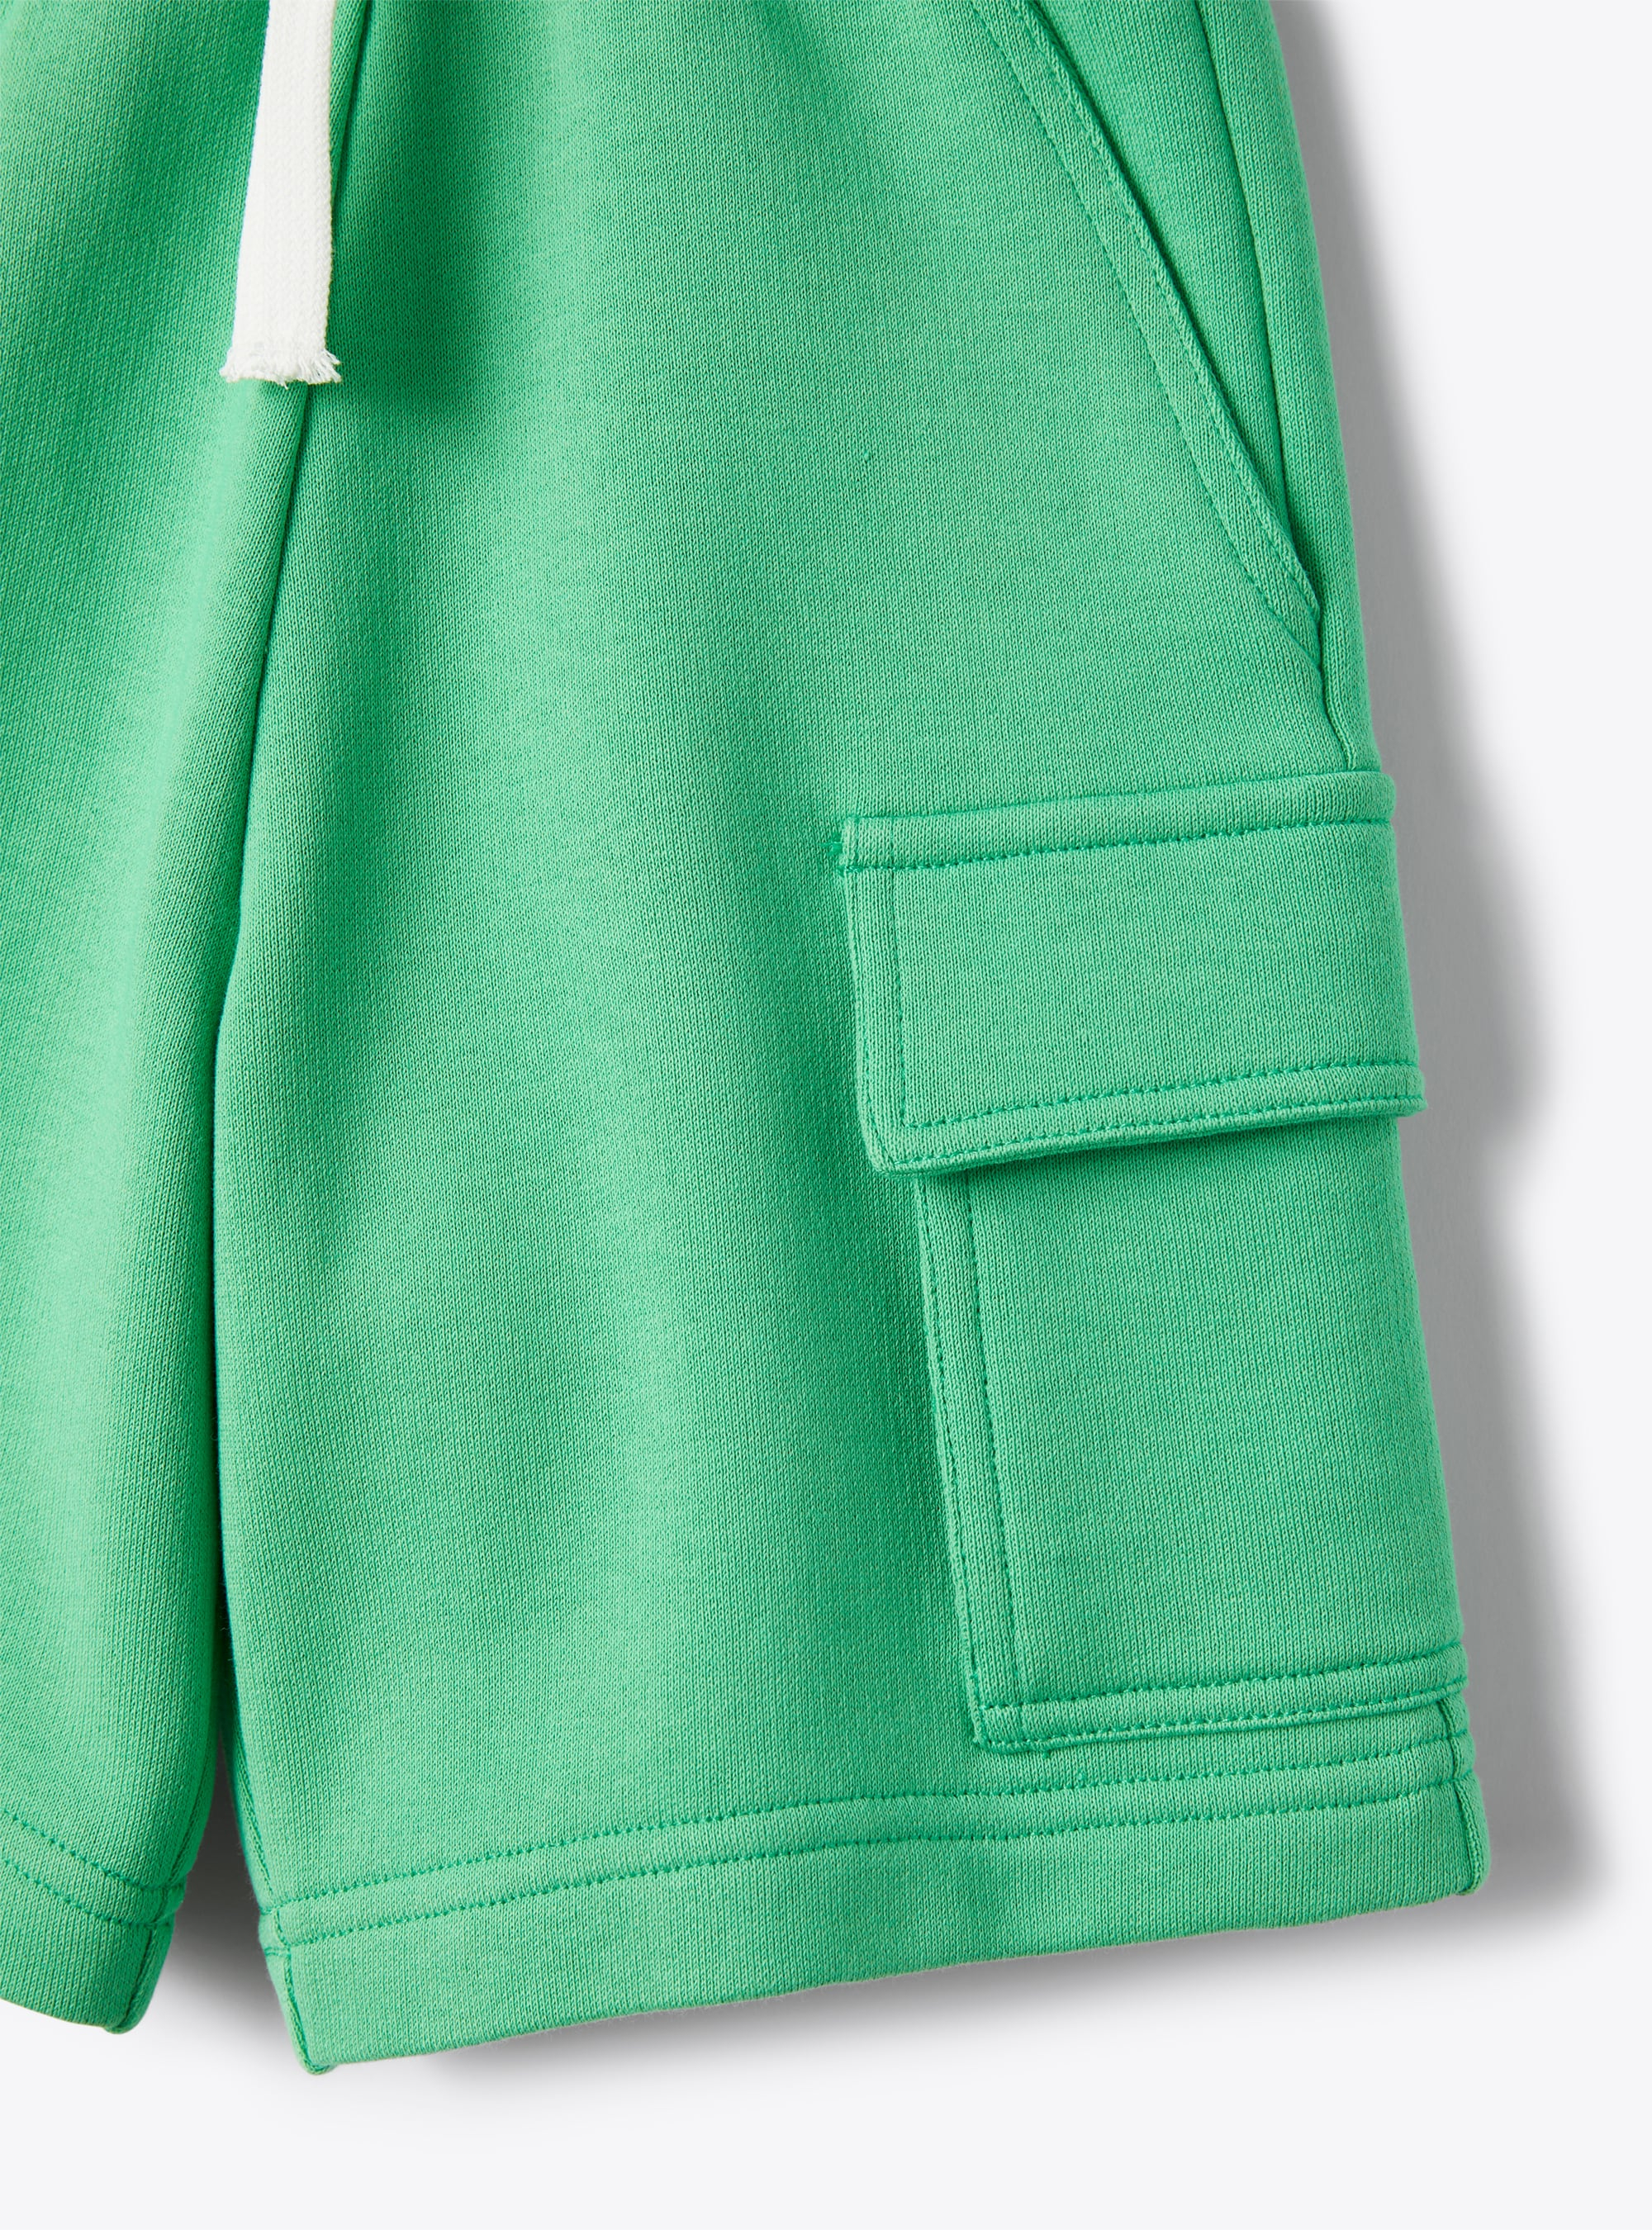 Cargo-style bermuda shorts in lime-green fleece - Green | Il Gufo